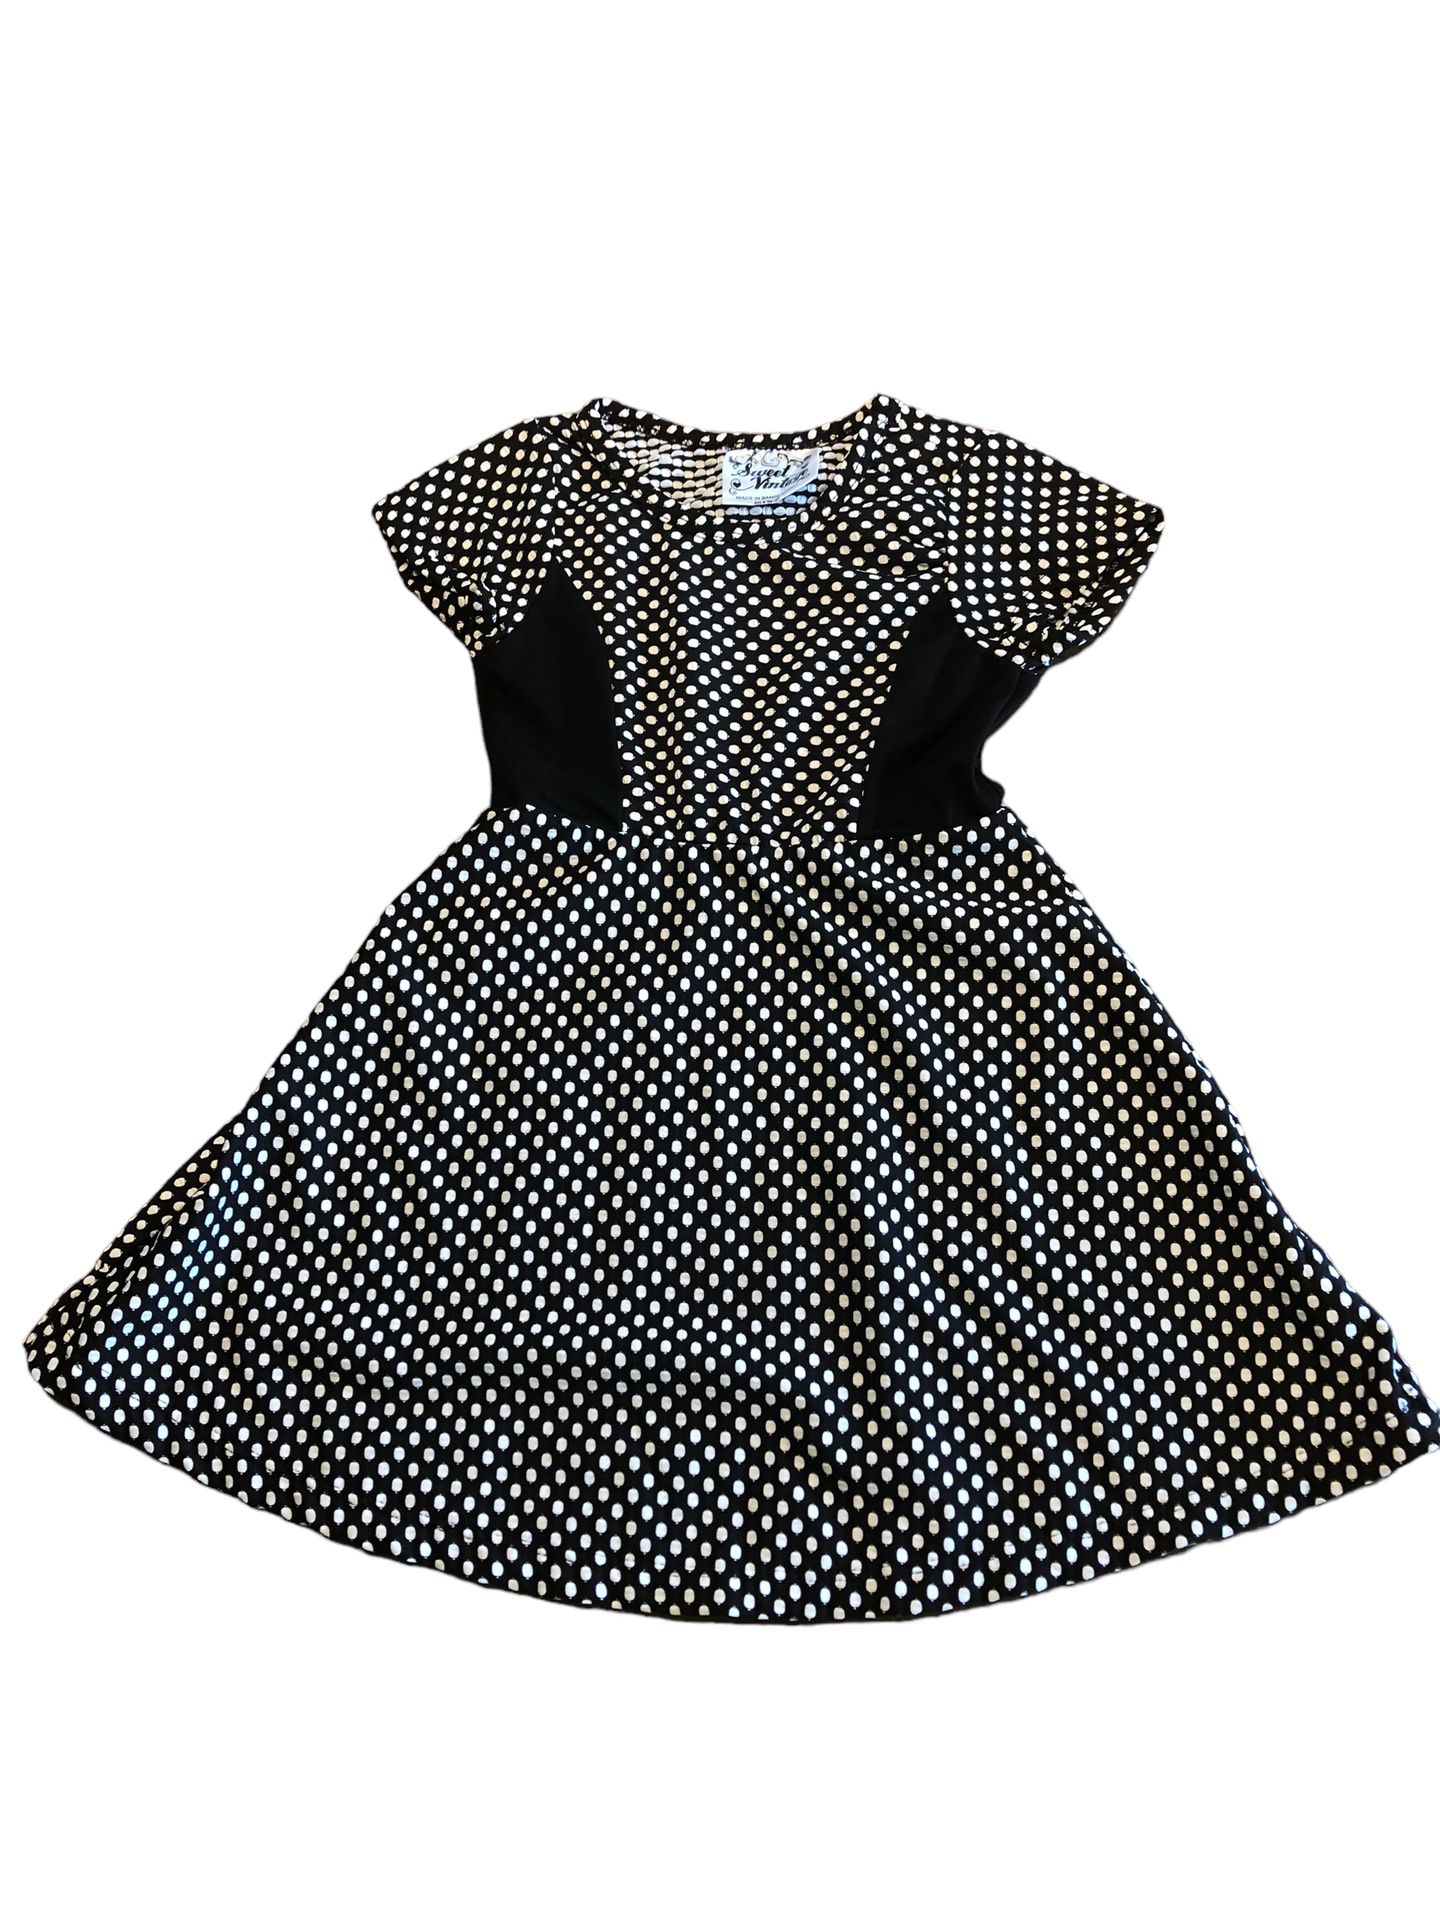 EUC 3T Boutique Black & White Polka Dot Vintage Retro Rockabilly Aline Dress